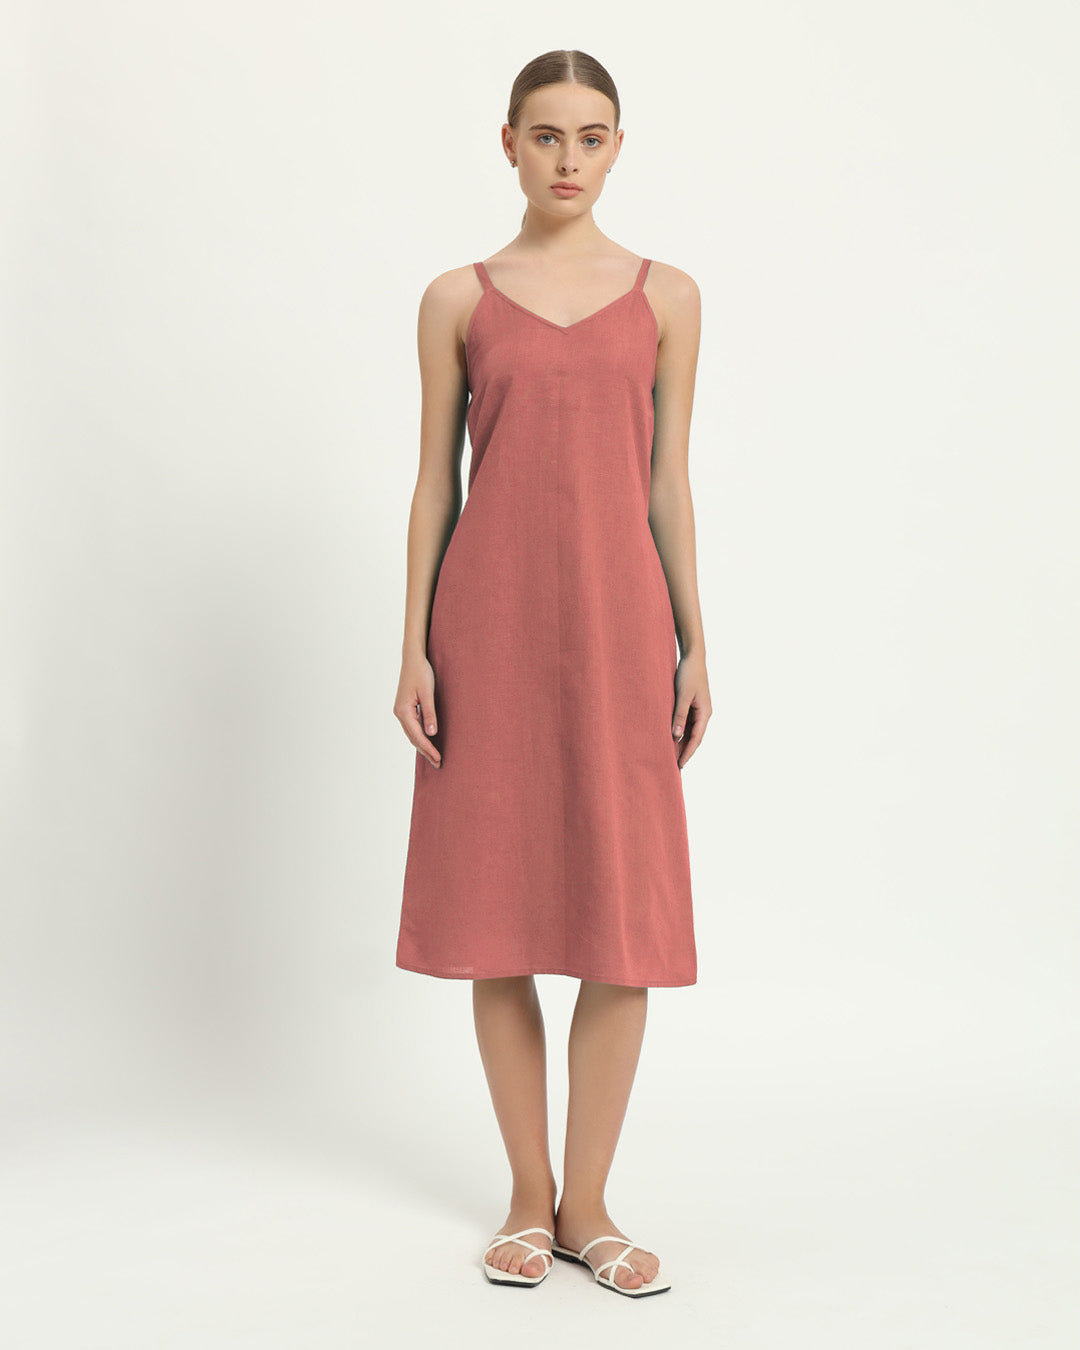 The Seesen Ivory Pink Cotton Dress